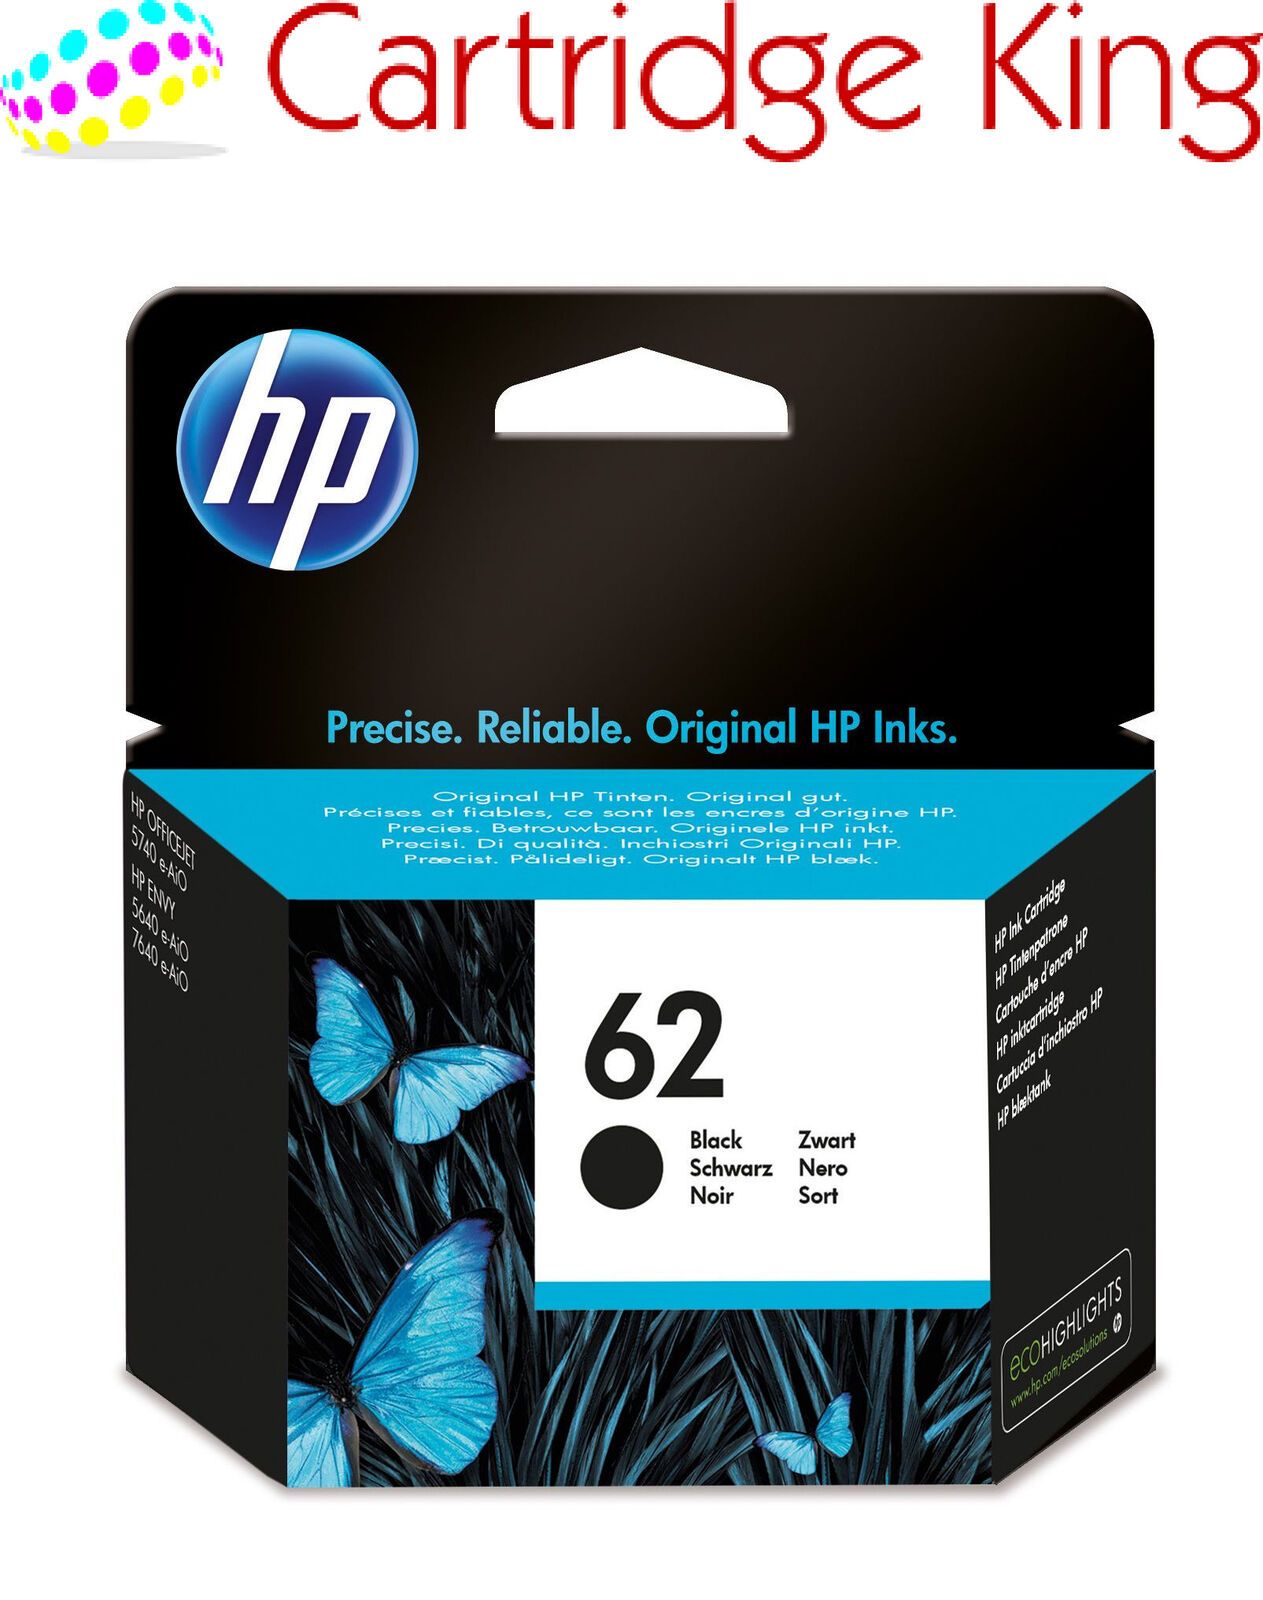 Original HP 62 Standard Black Cartridge for HP Envy 5660 e-All-in-One printer